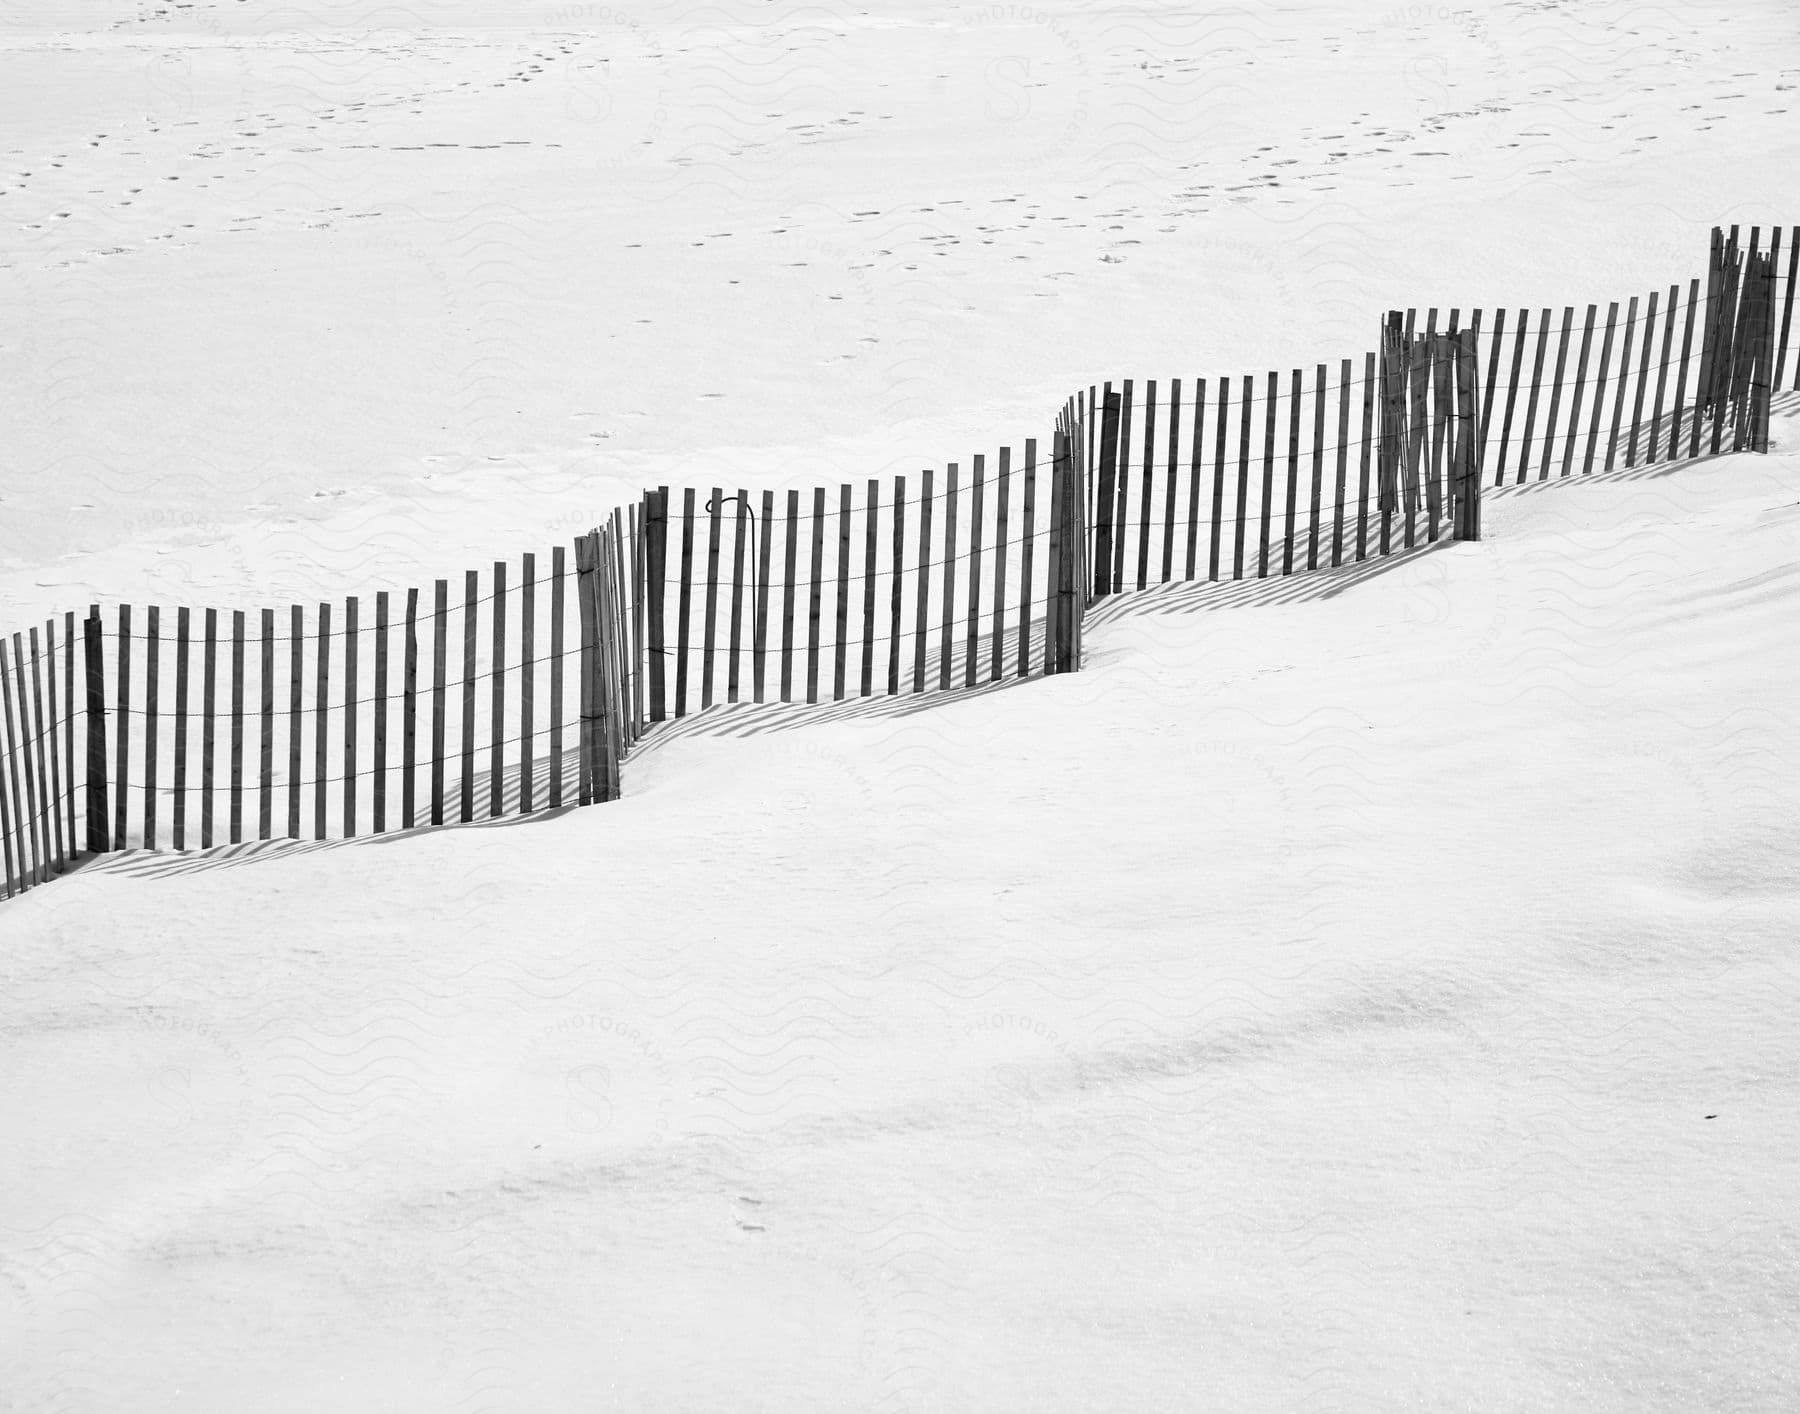 A fence crossing a snowy field